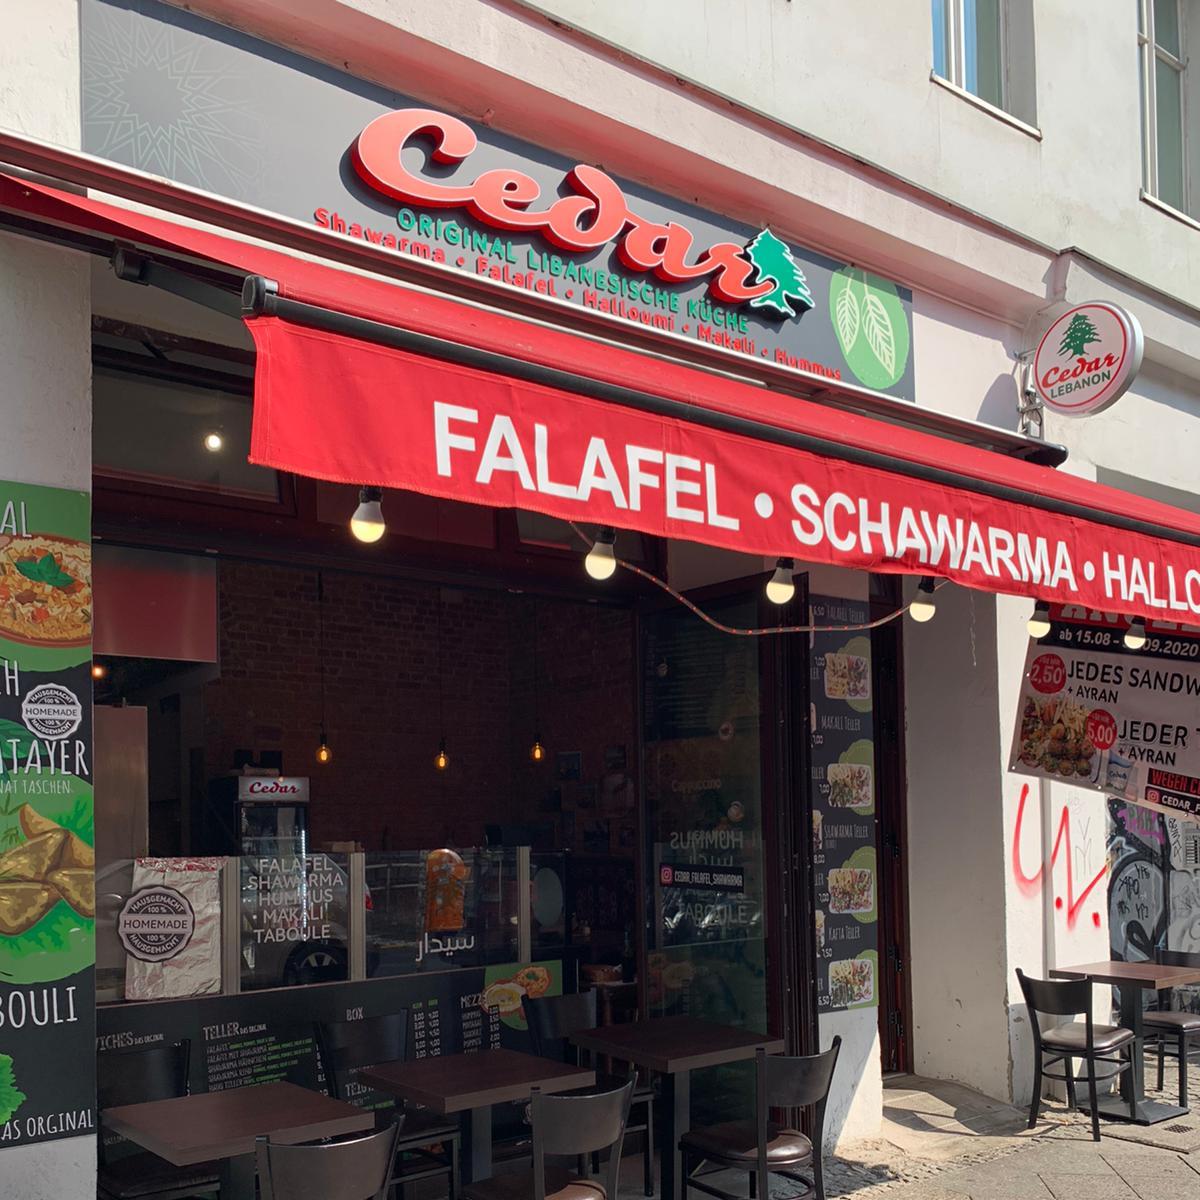 Restaurant "Cedar Shawarma Falafel Berlin (Schawarma)" in Berlin